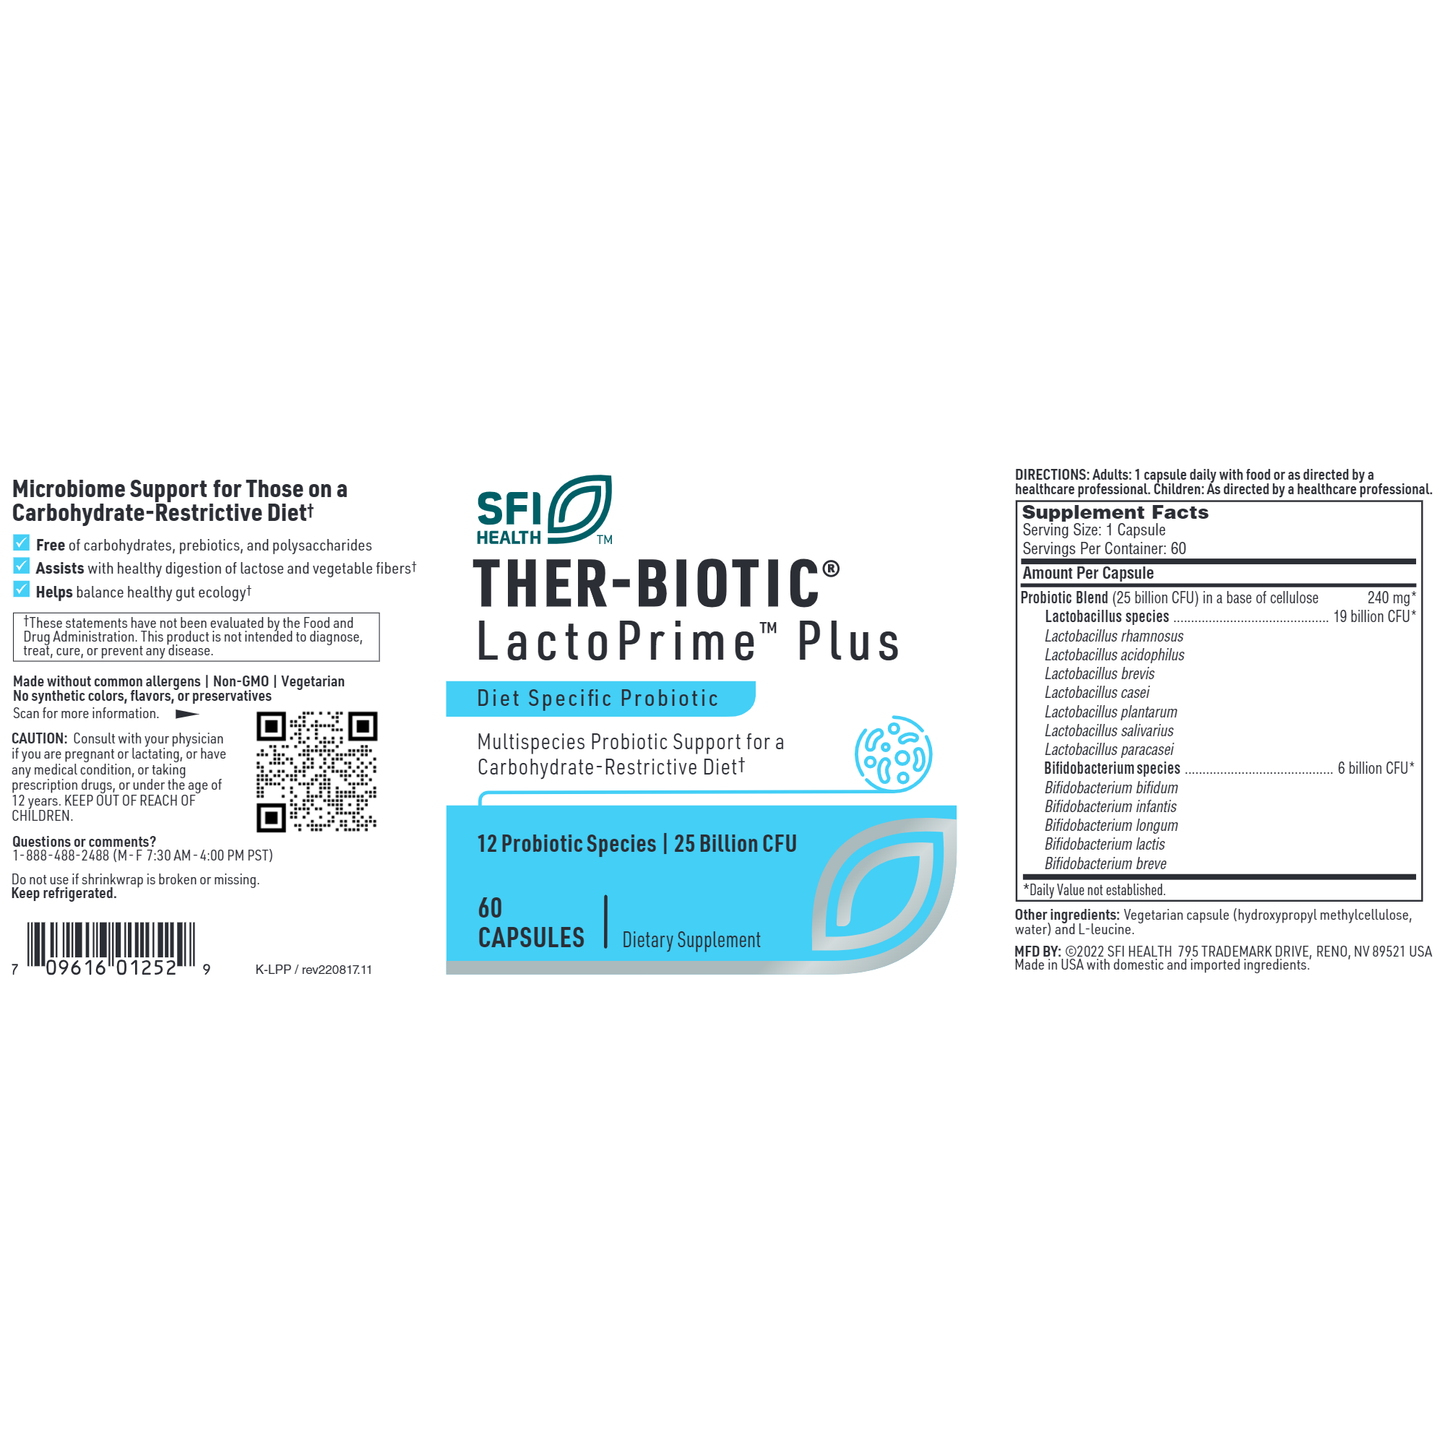 Ther-Biotic LactoPrime Plus